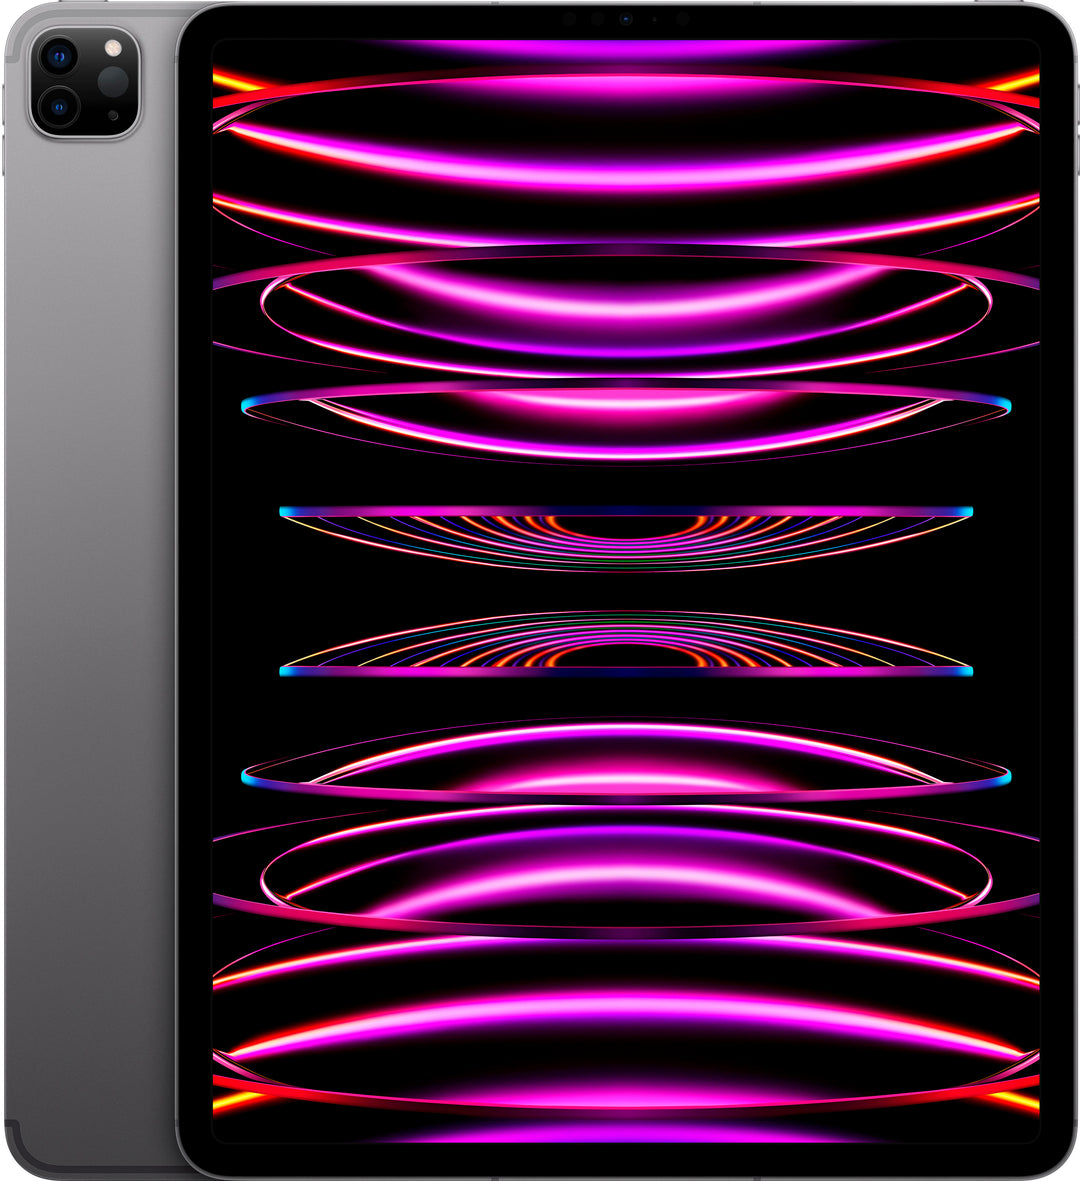 Apple - 12.9-Inch iPad Pro (Latest Model) with Wi-Fi + Cellular - 256GB - Space Gray (Verizon)_0